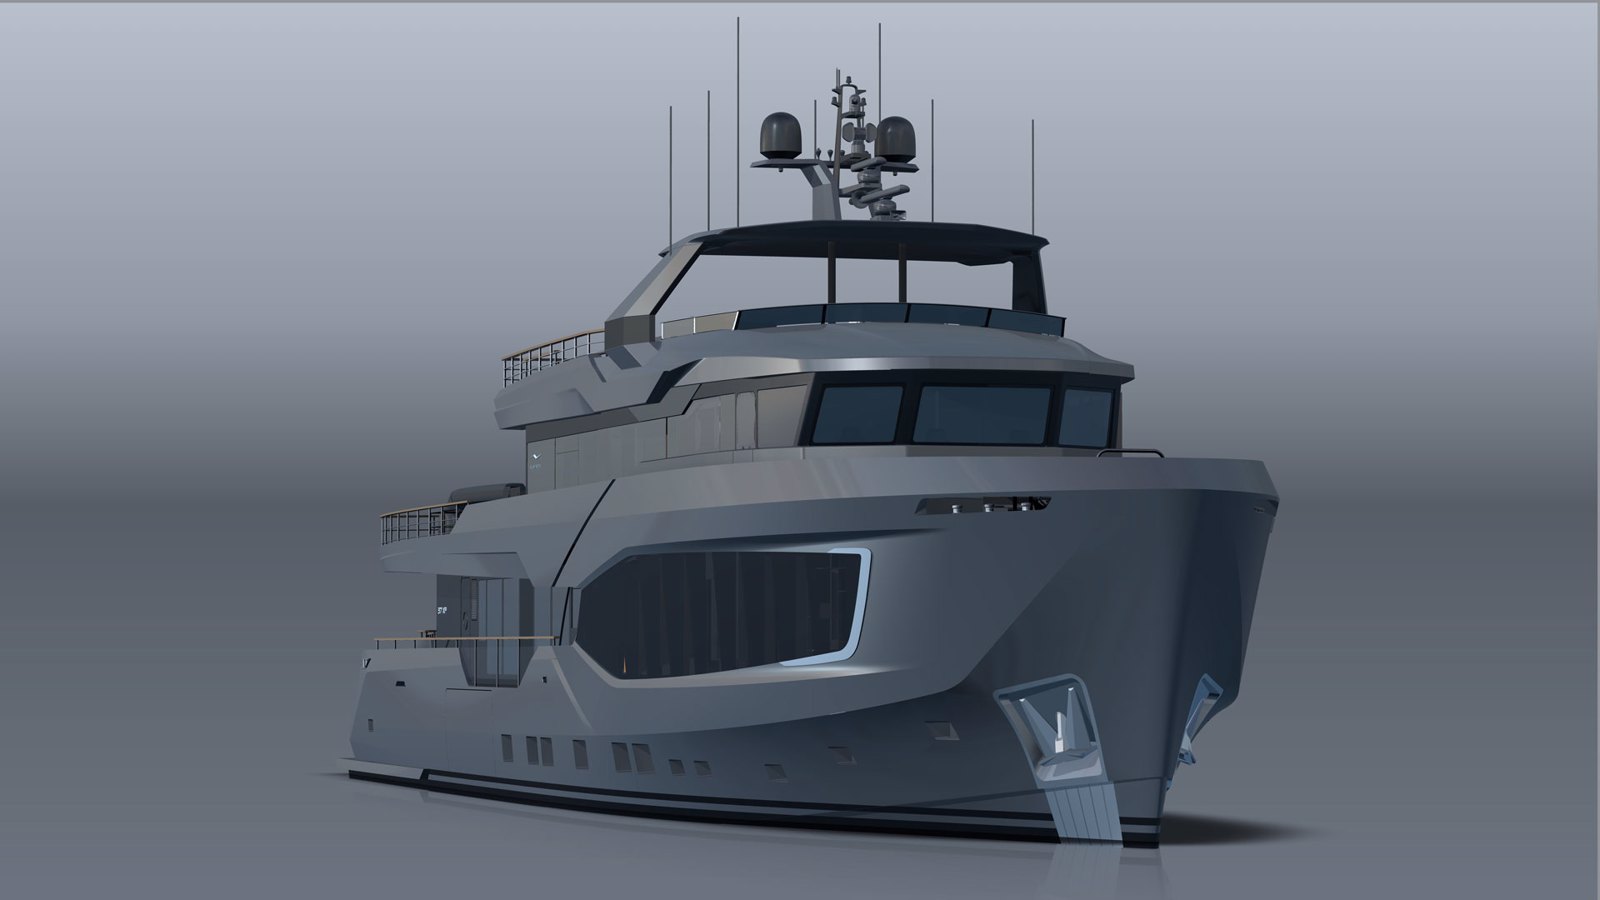 The new 37XP superyacht by Numarine